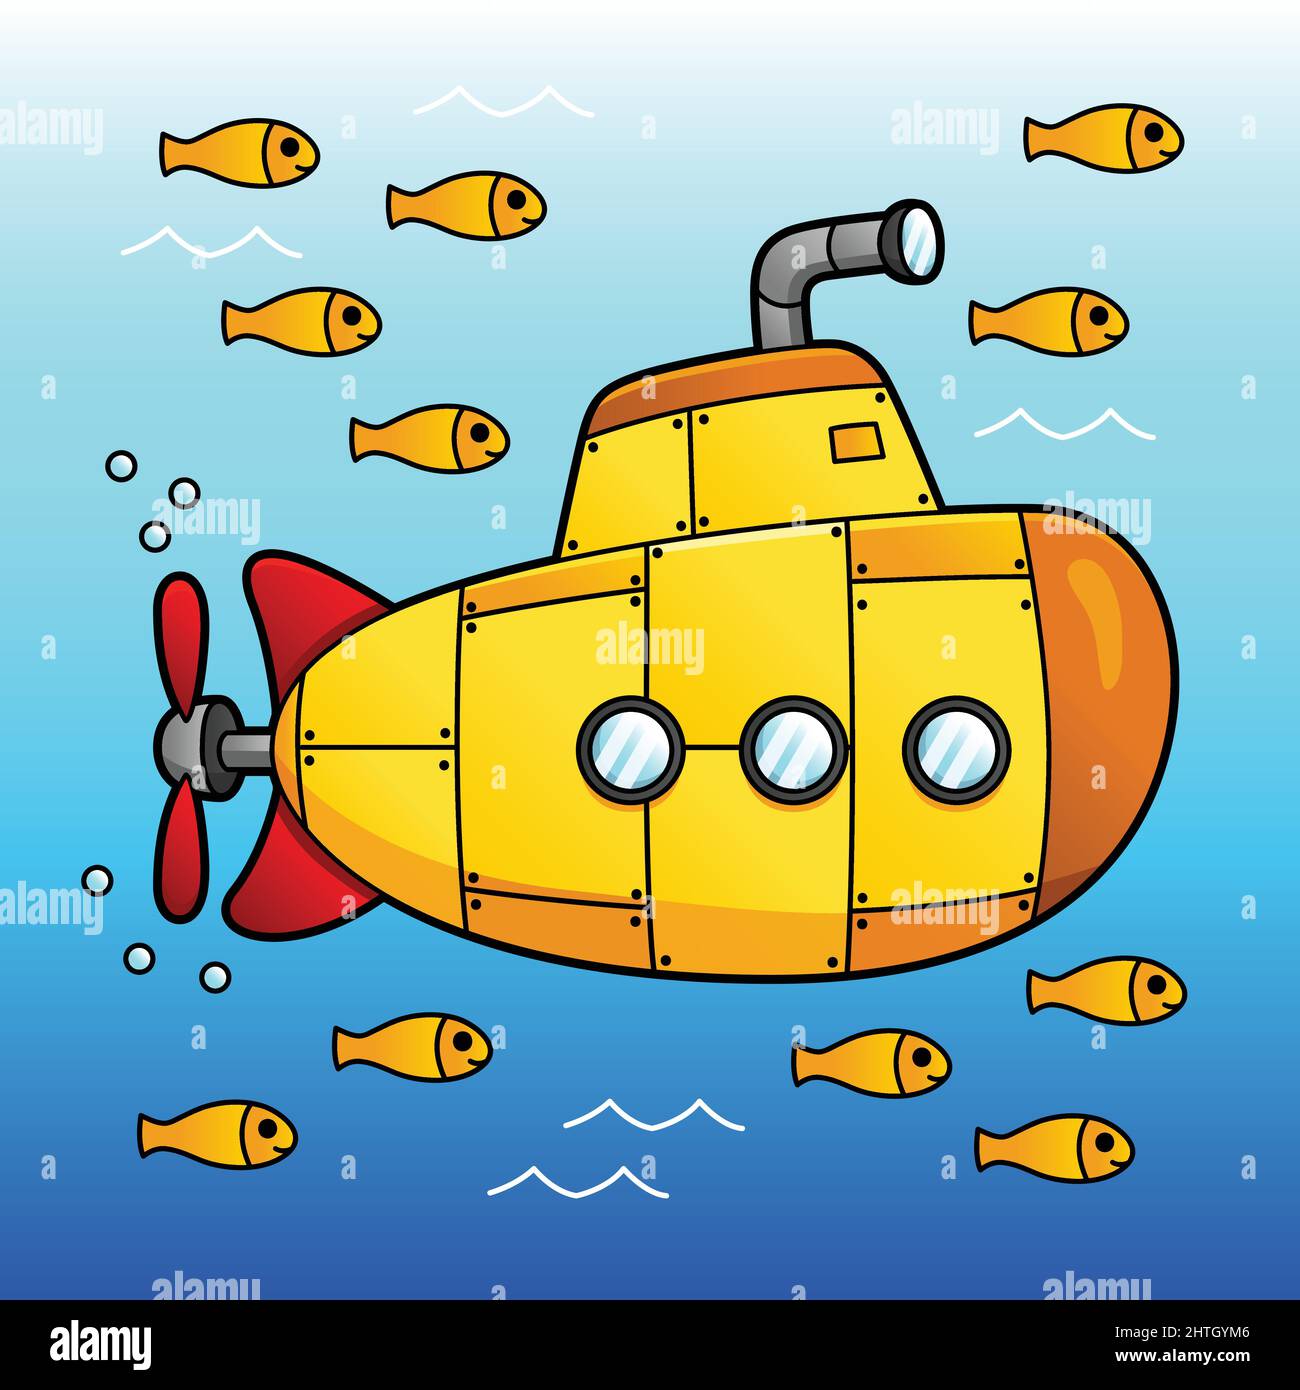 Submarine Cartoon Colored Vehicle Illustration Stock Vector